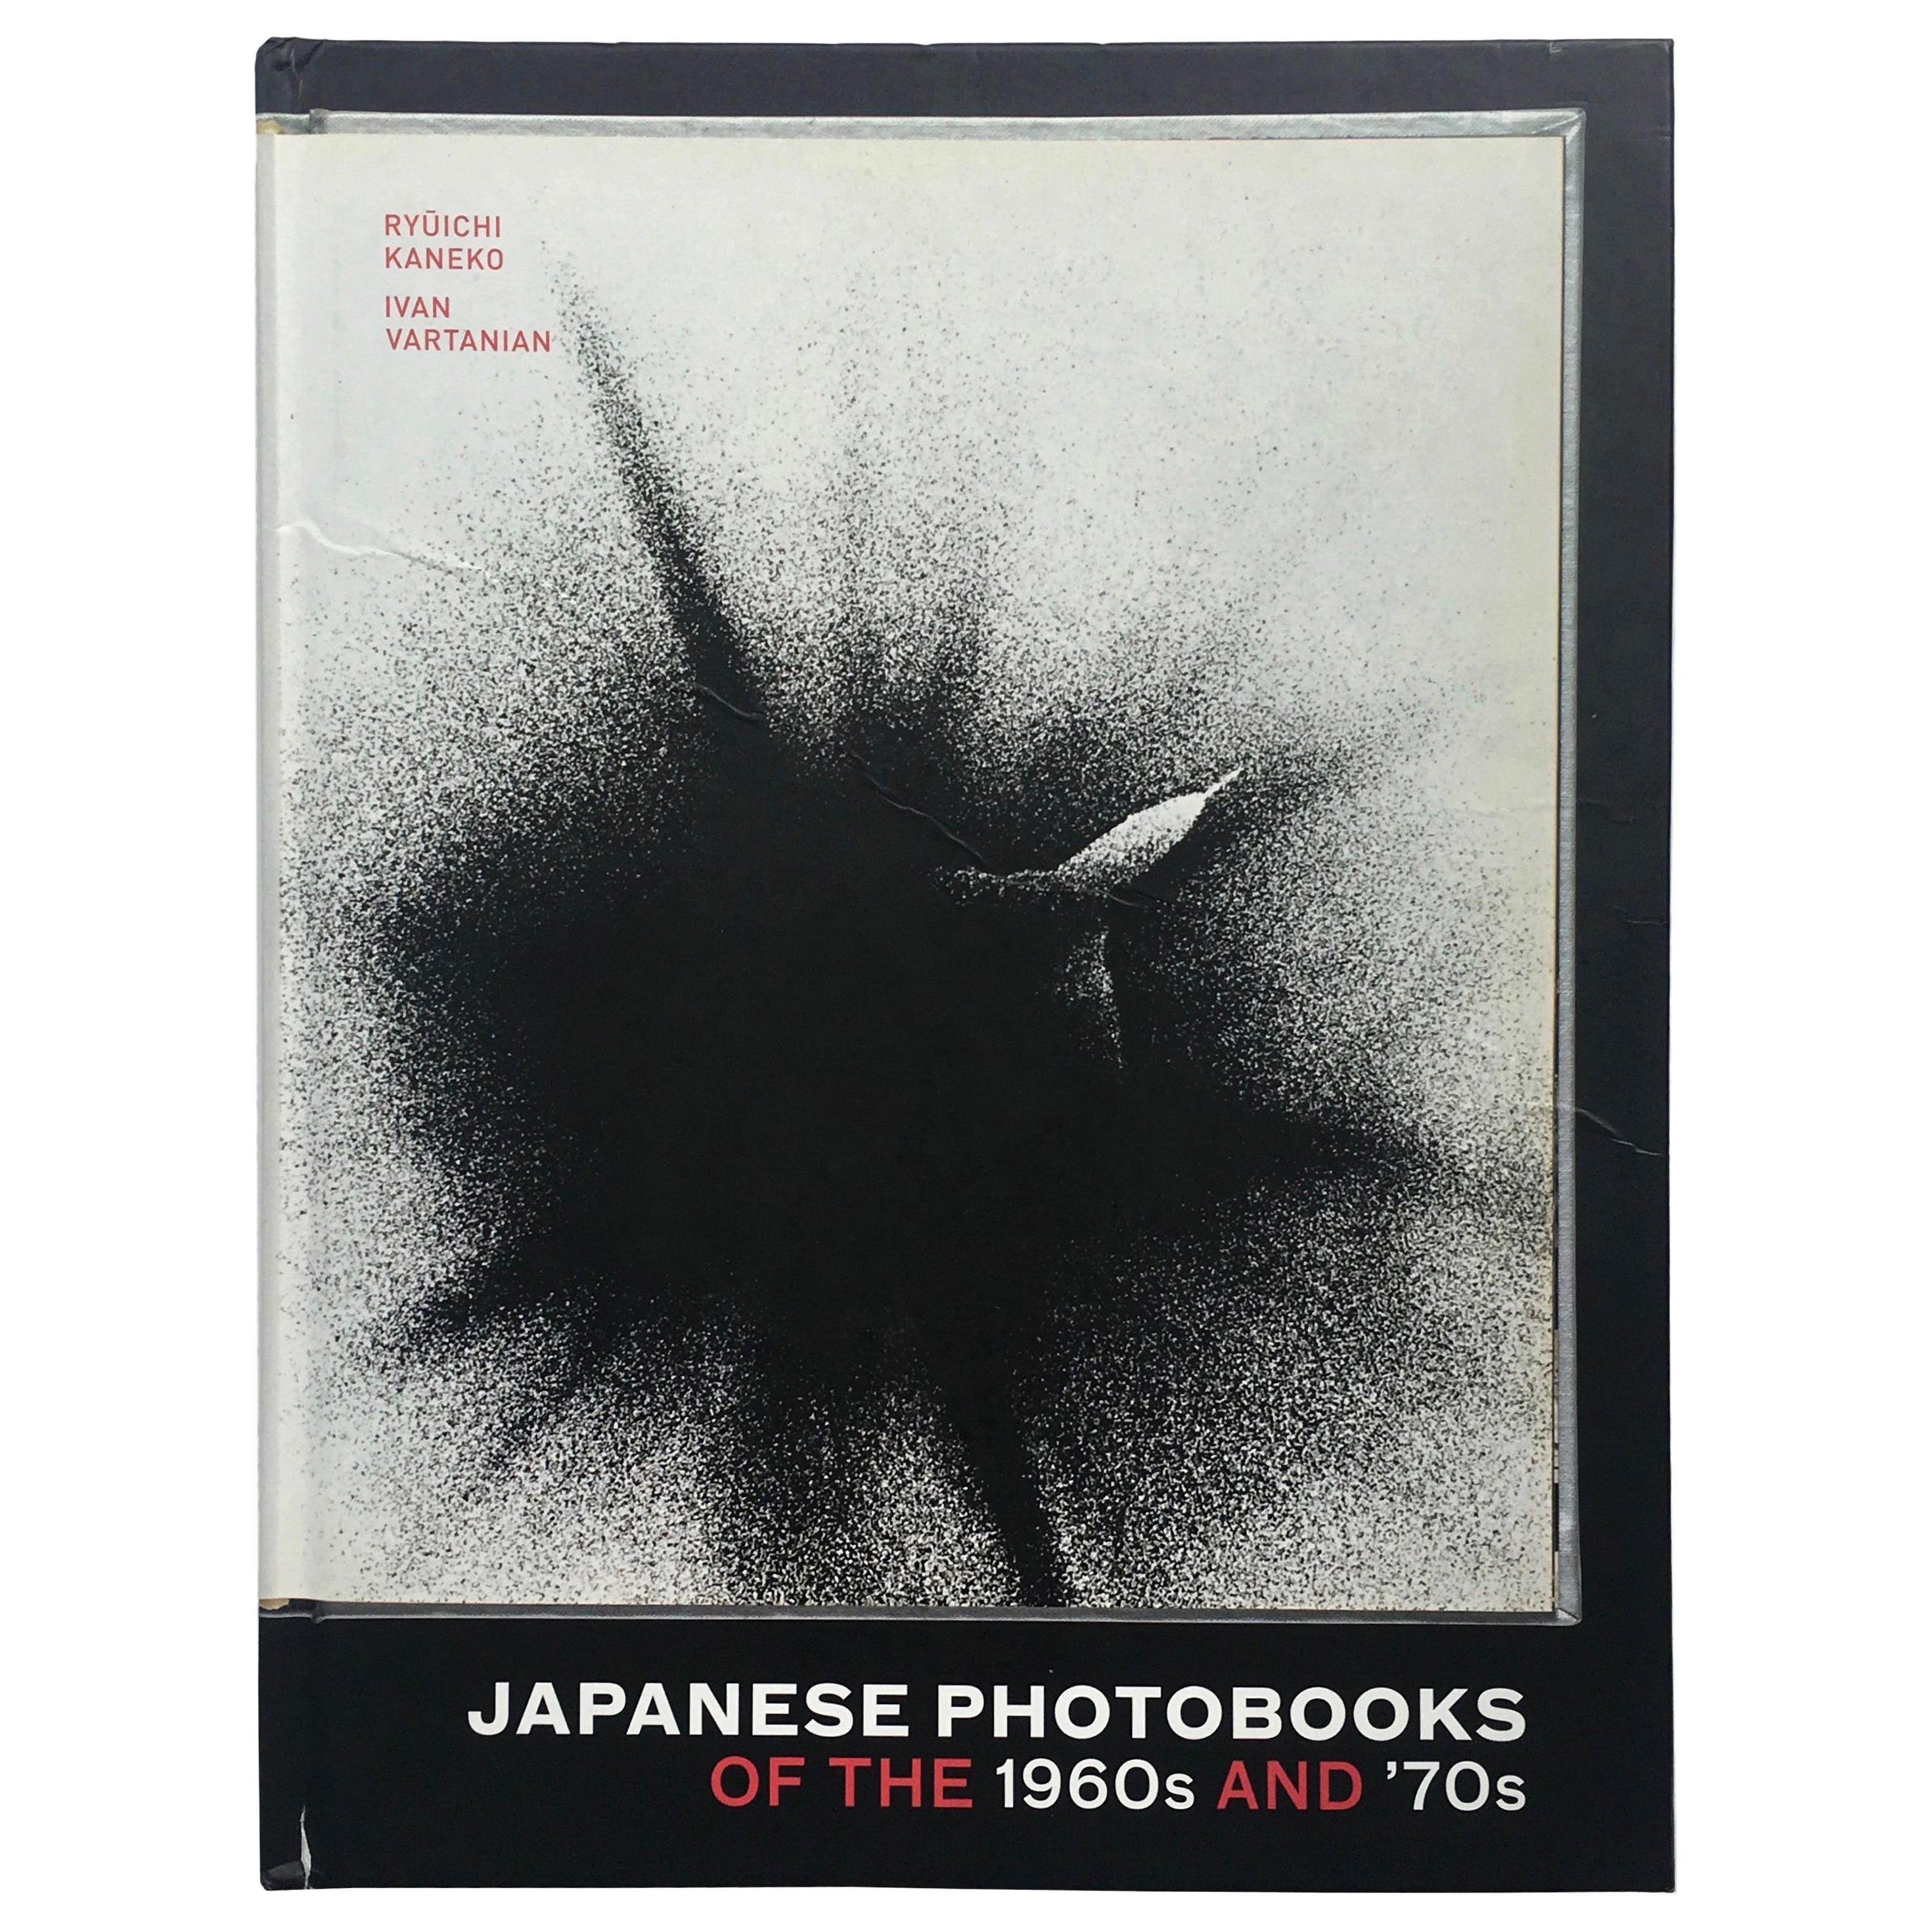 Japanese Photobooks of the 1960s and '70s -R. Kaneko, I. Vartanian- 1st Ed, 2009